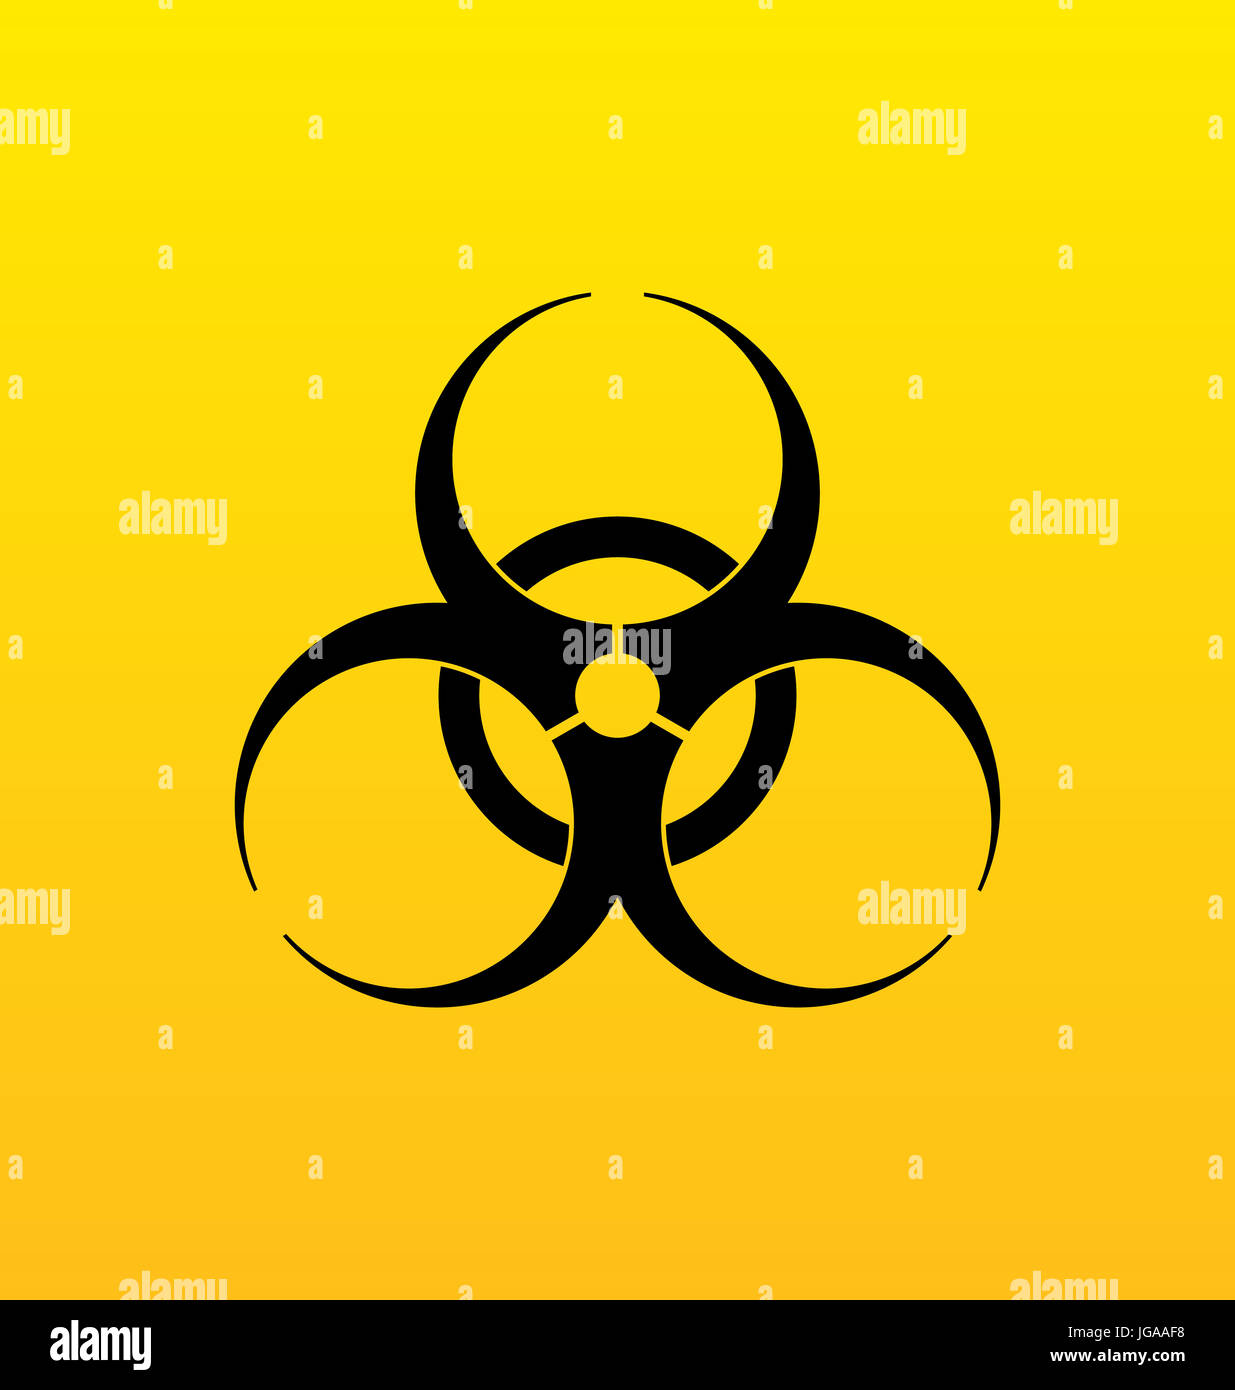 Biohazard or Biological Threat Alert Icon. Warning Sign of Virus. Danger Coronavirus Bio Hazard ...